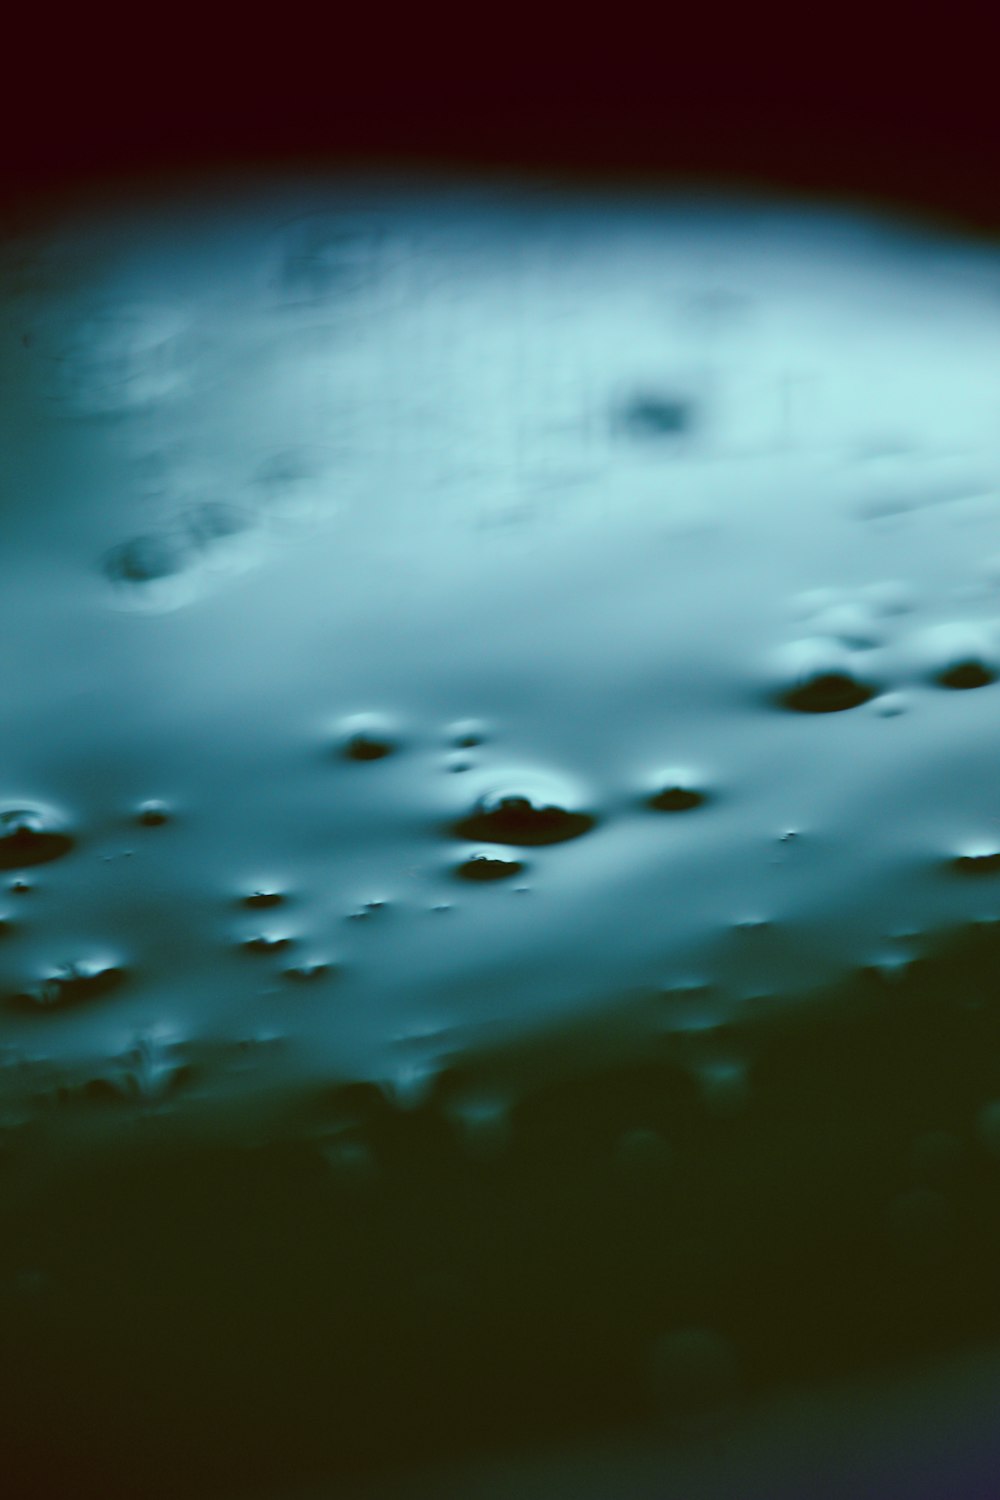 water droplets on glass window